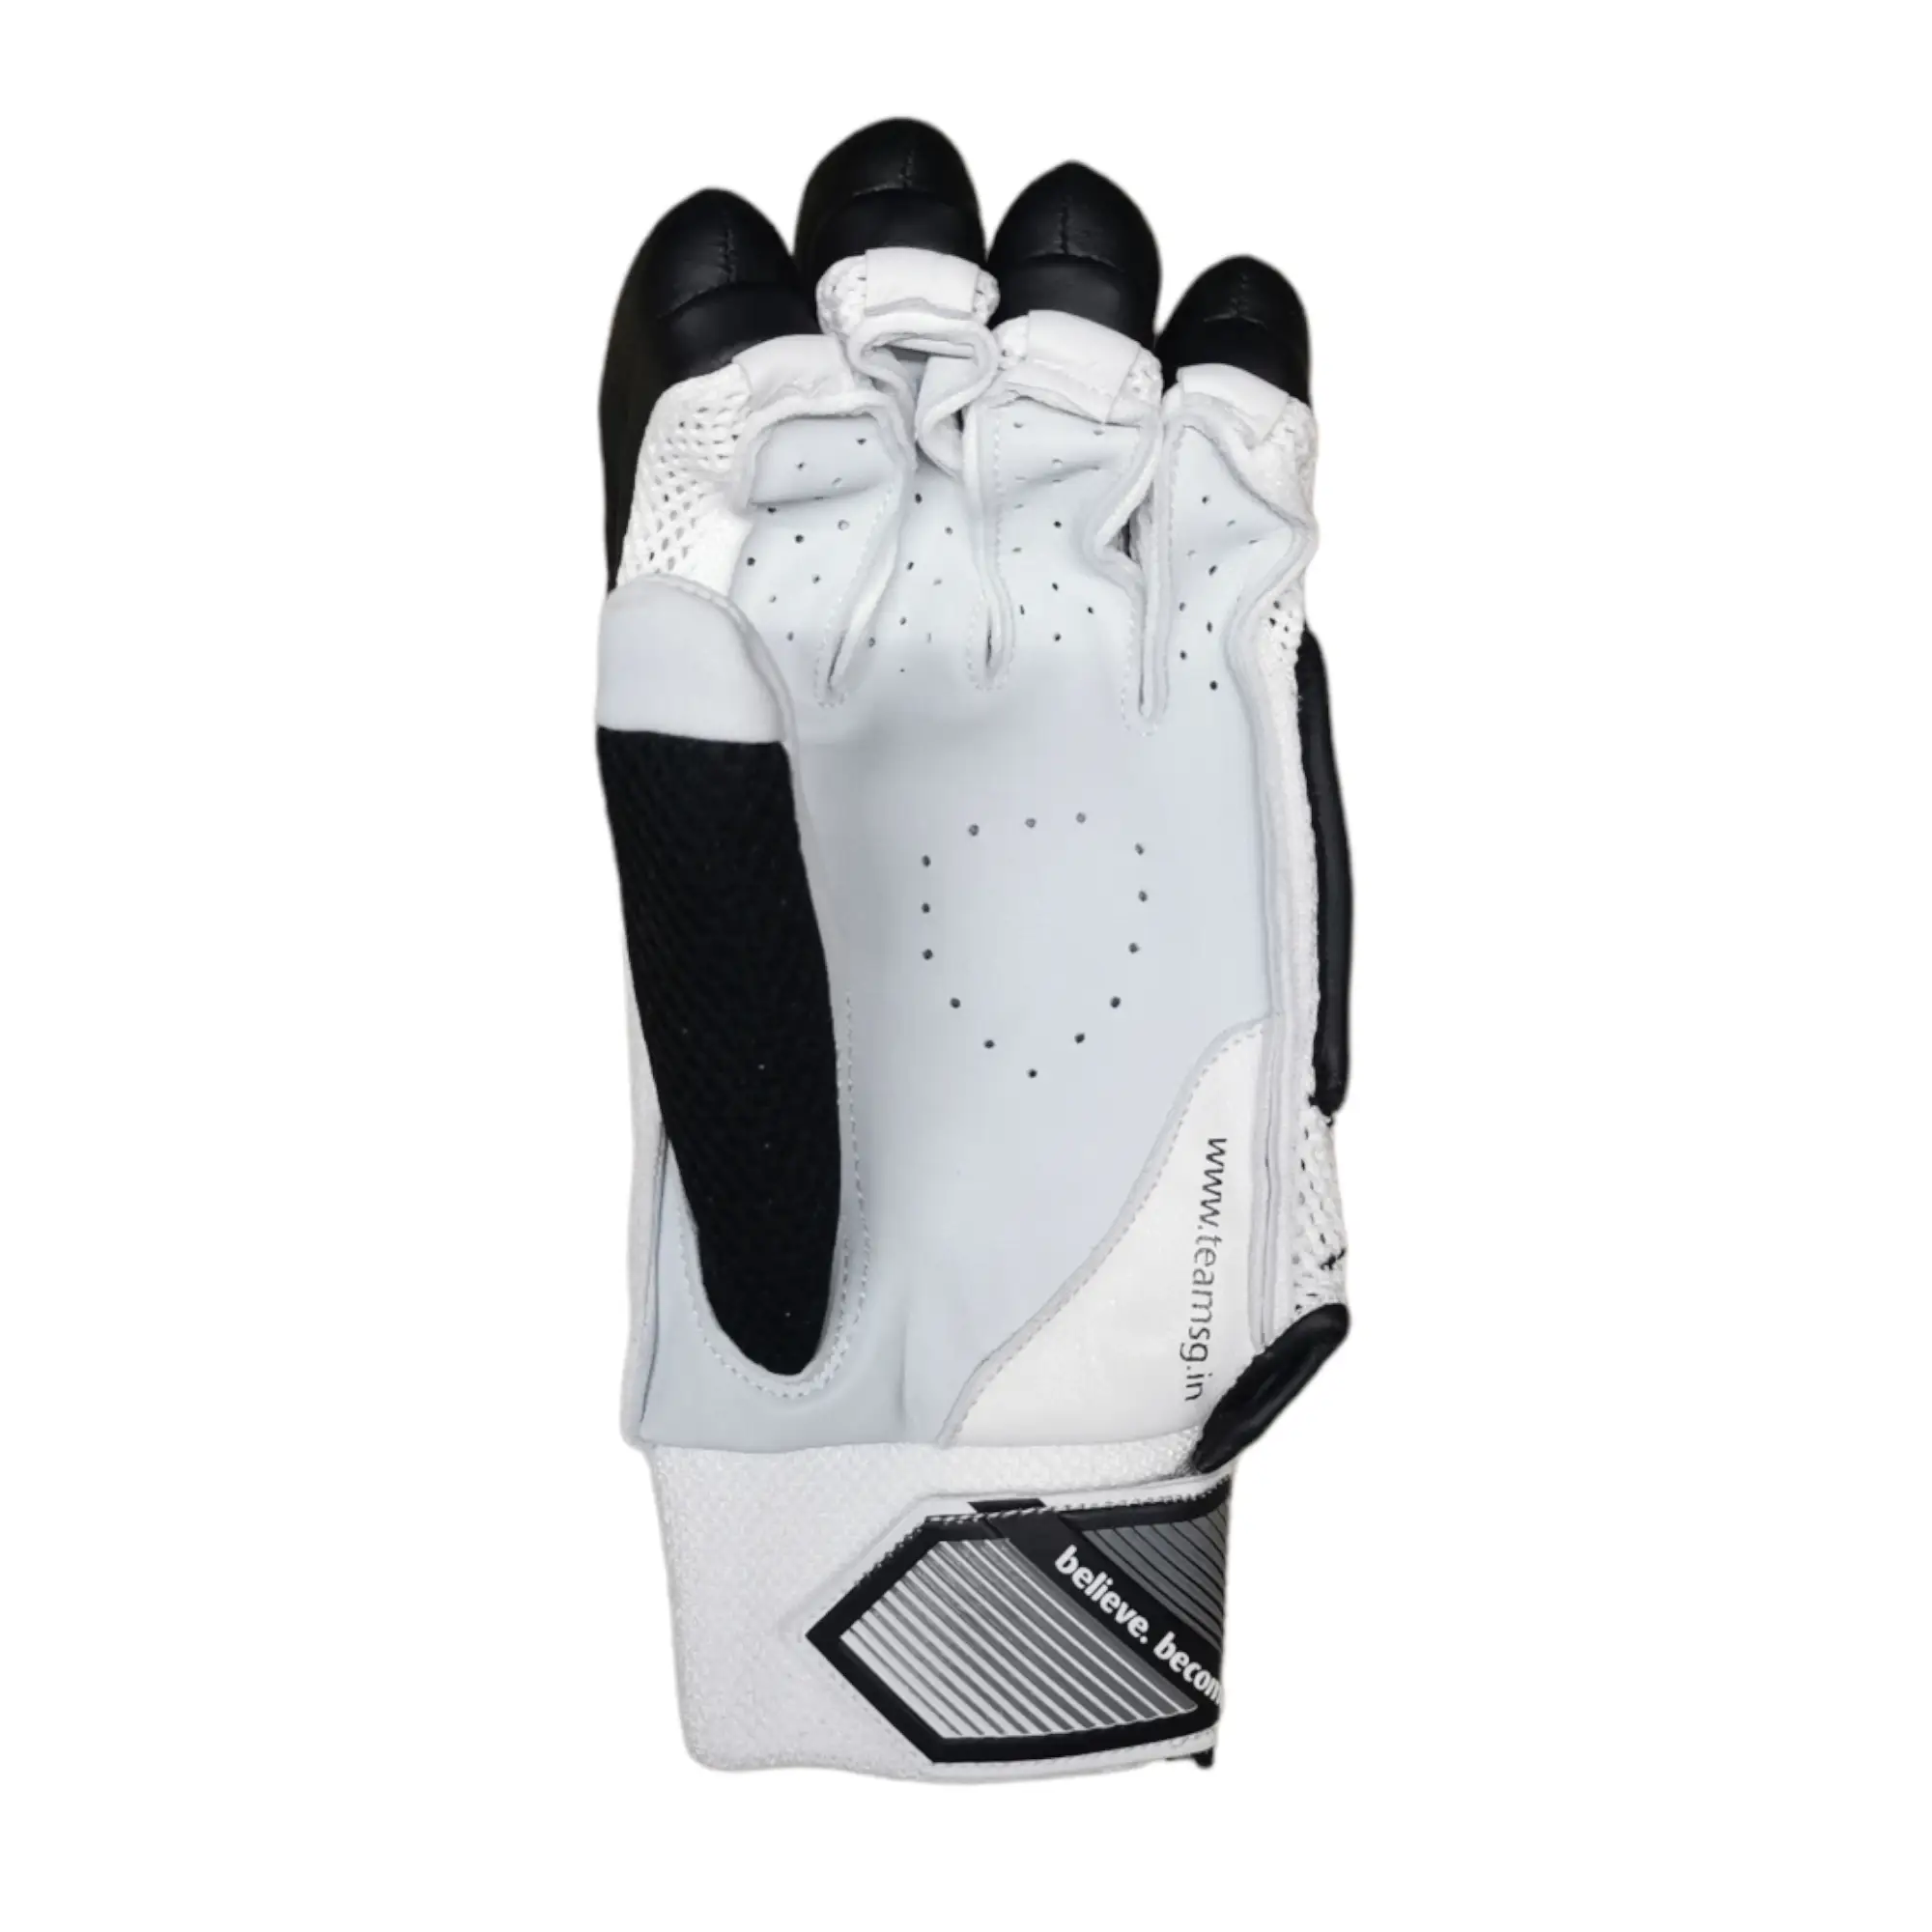 SG Test Black Cricket Batting Gloves - GLOVE - BATTING